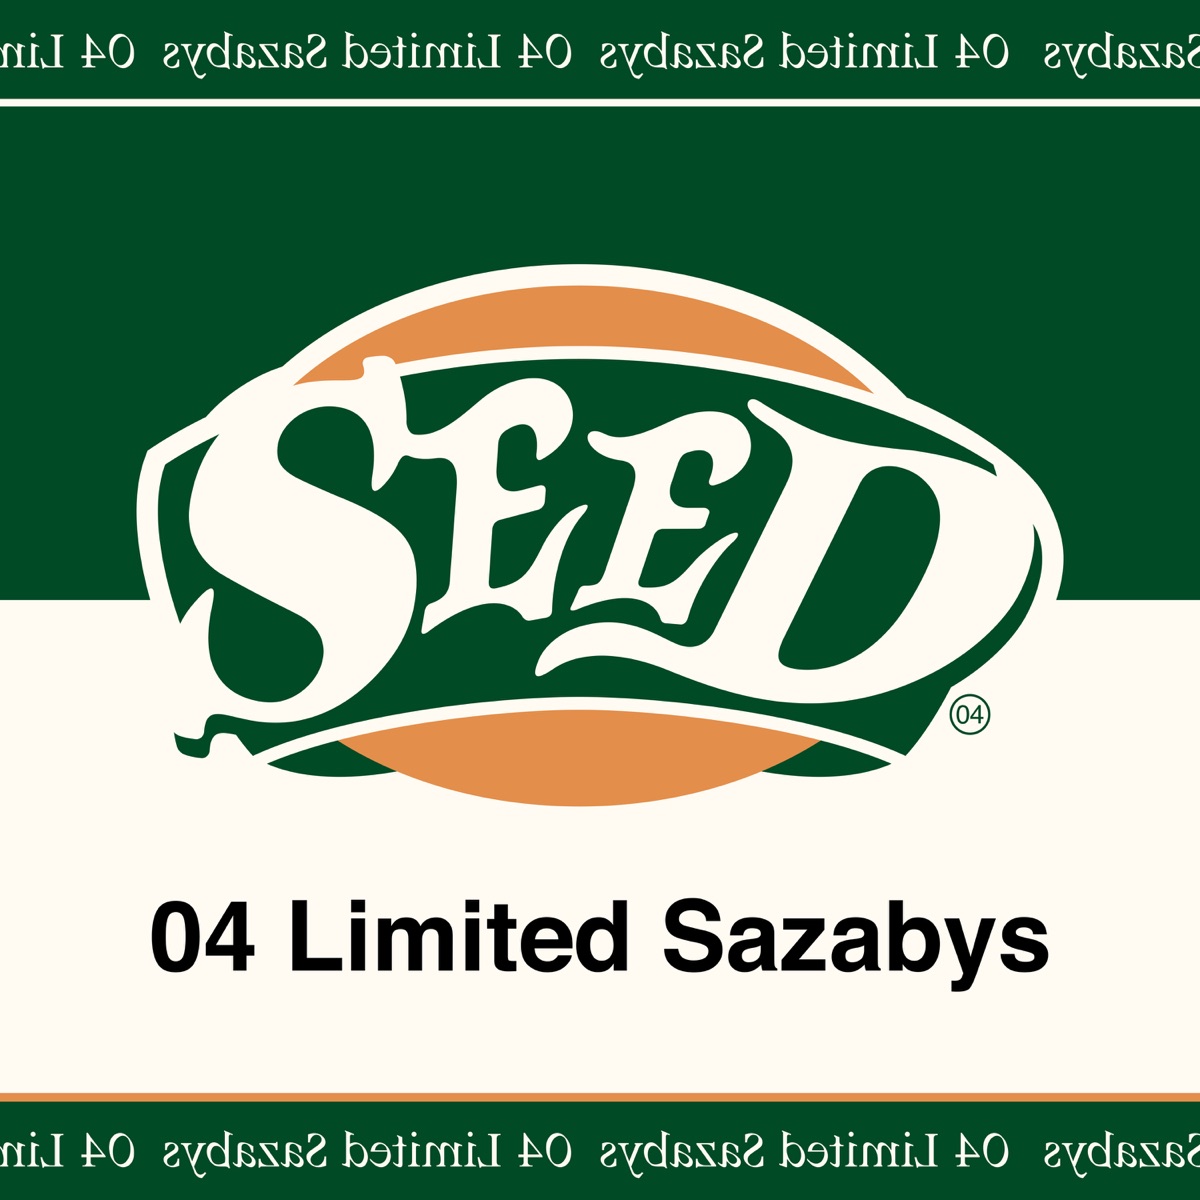 『04 Limited Sazabys - Cycle 歌詞』収録の『SEED』ジャケット